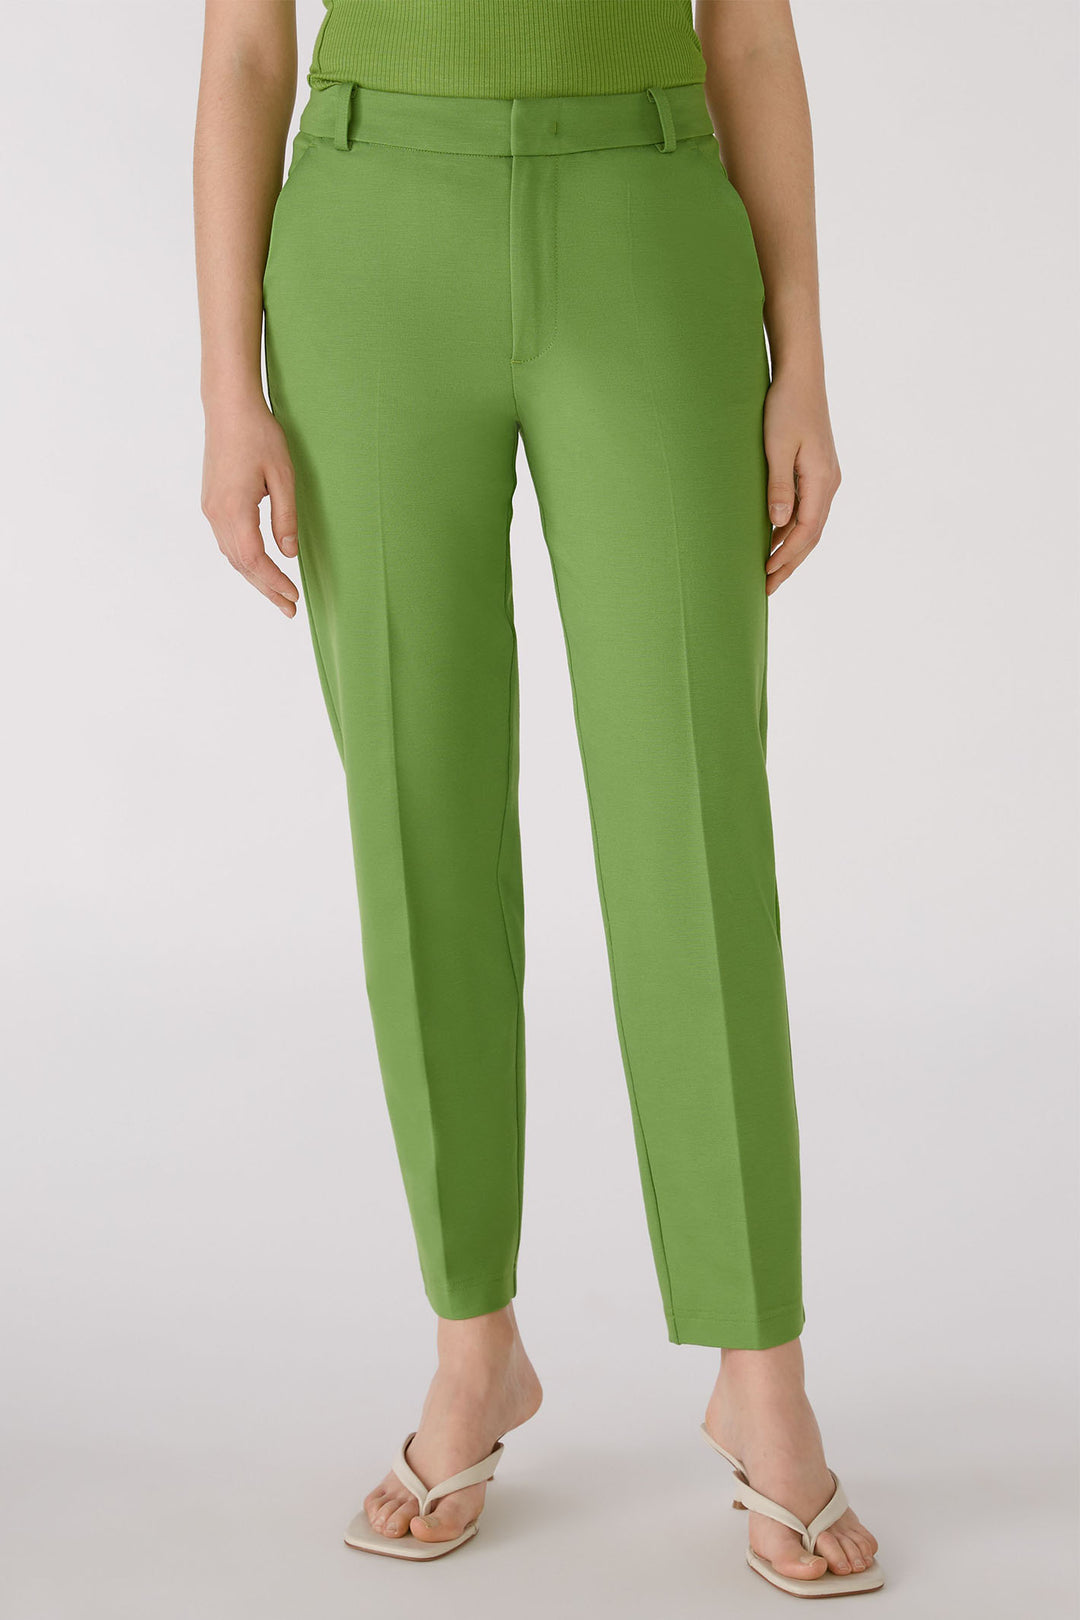 Oui 88390 Green Feylia Jersey Trousers - Olivia Grace Fashion